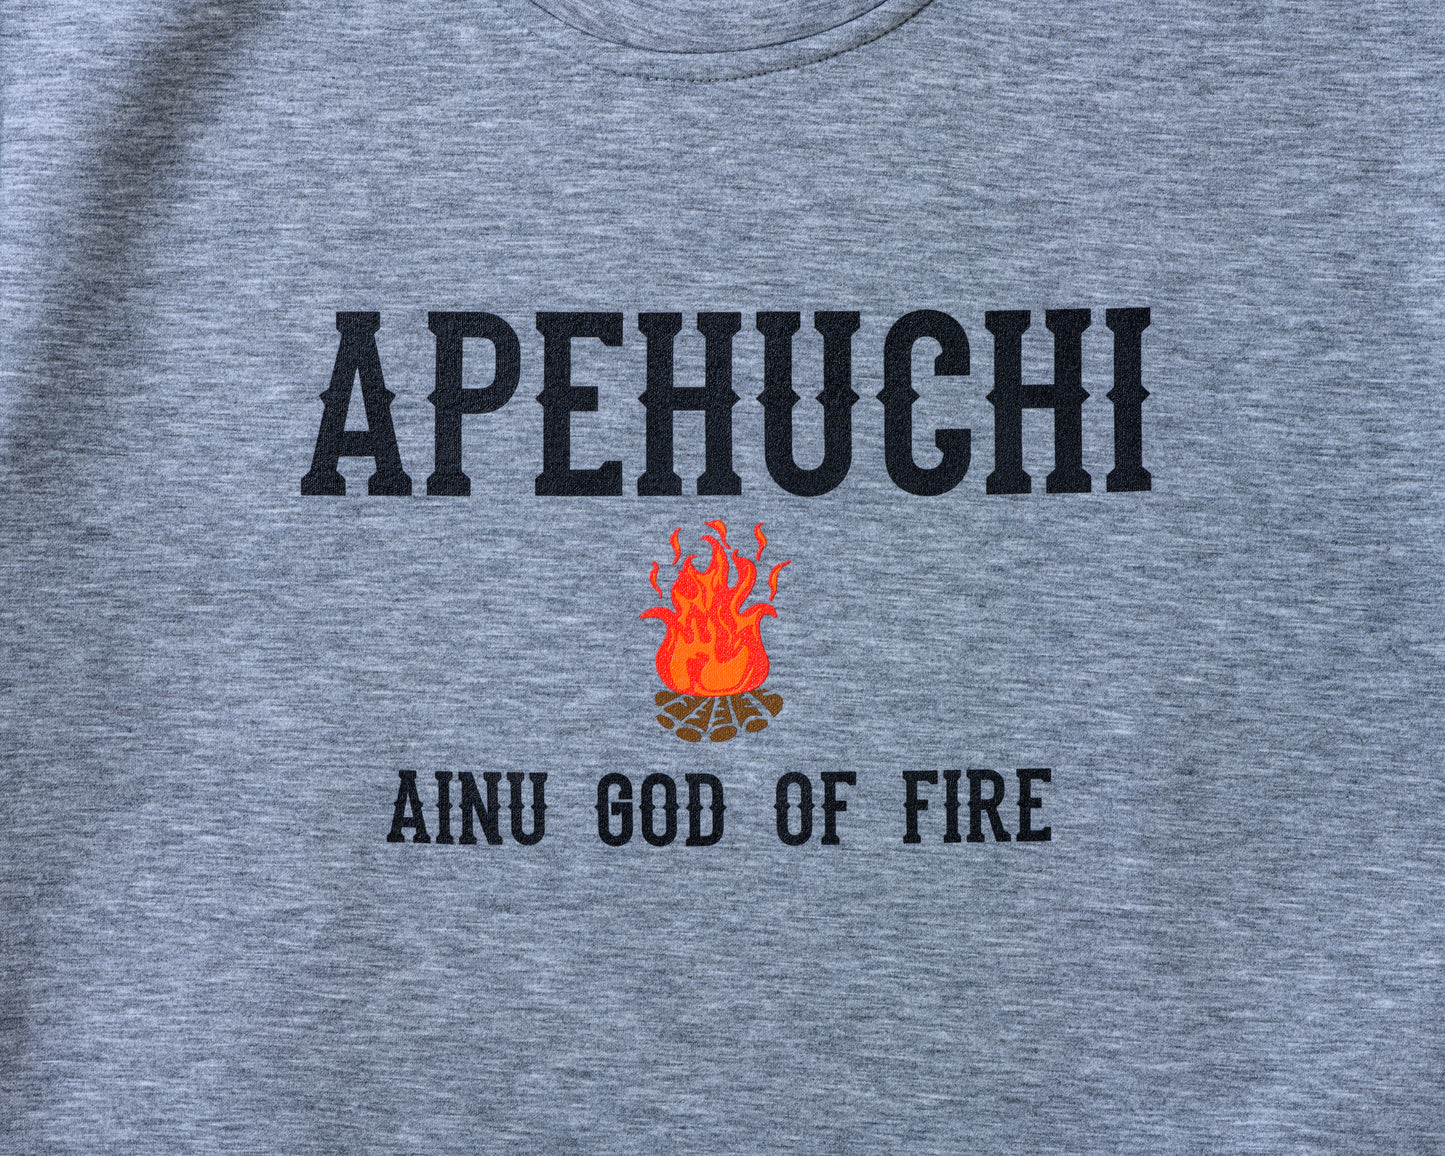 APEHUCHI_02 Sweatshirt